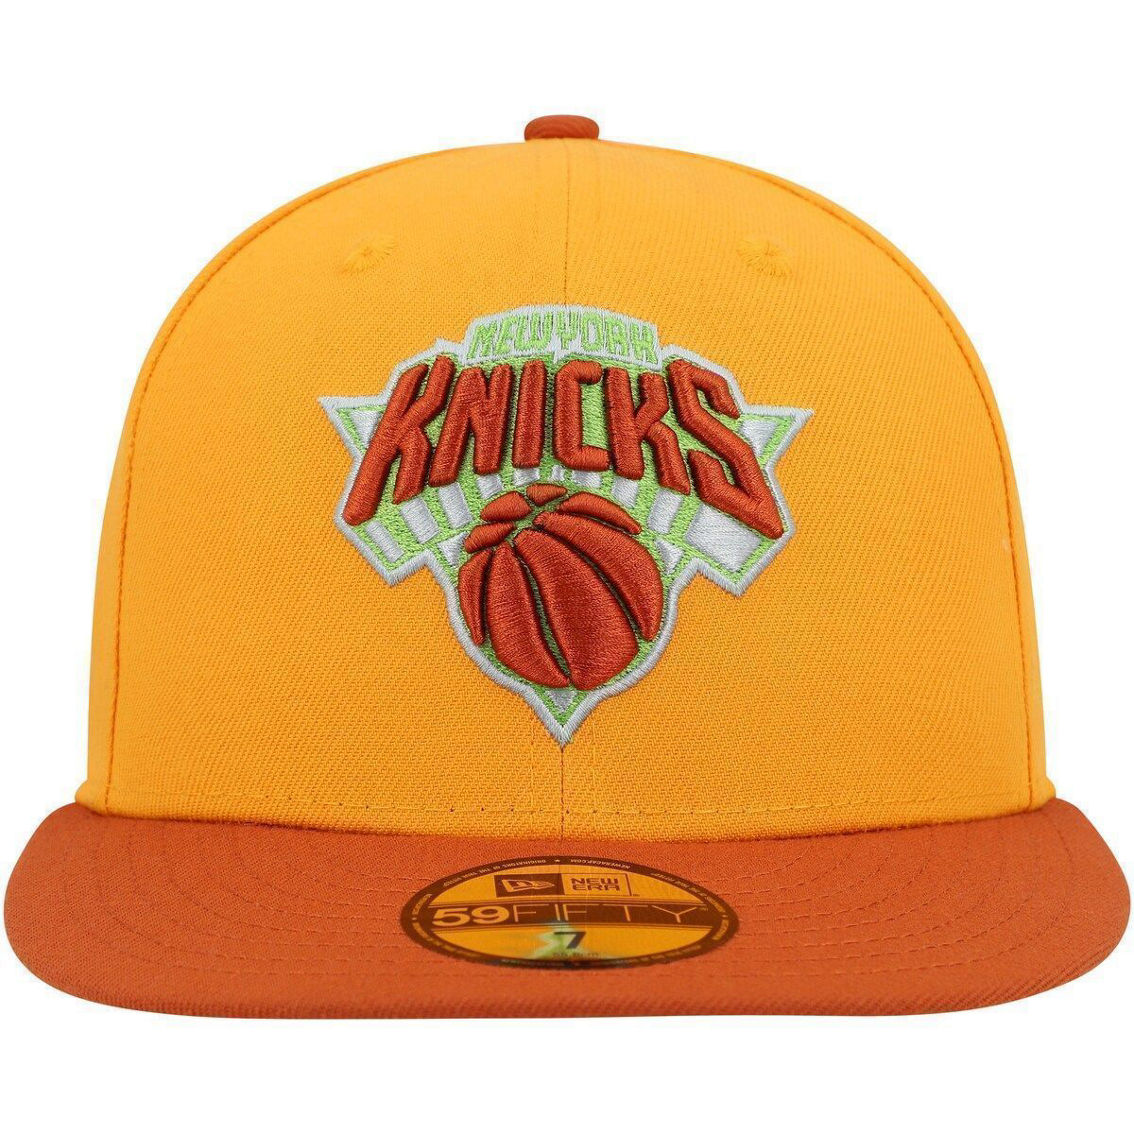 New Era Men's Gold/rust New York Knicks 59fifty Fitted Hat, Fan Shop